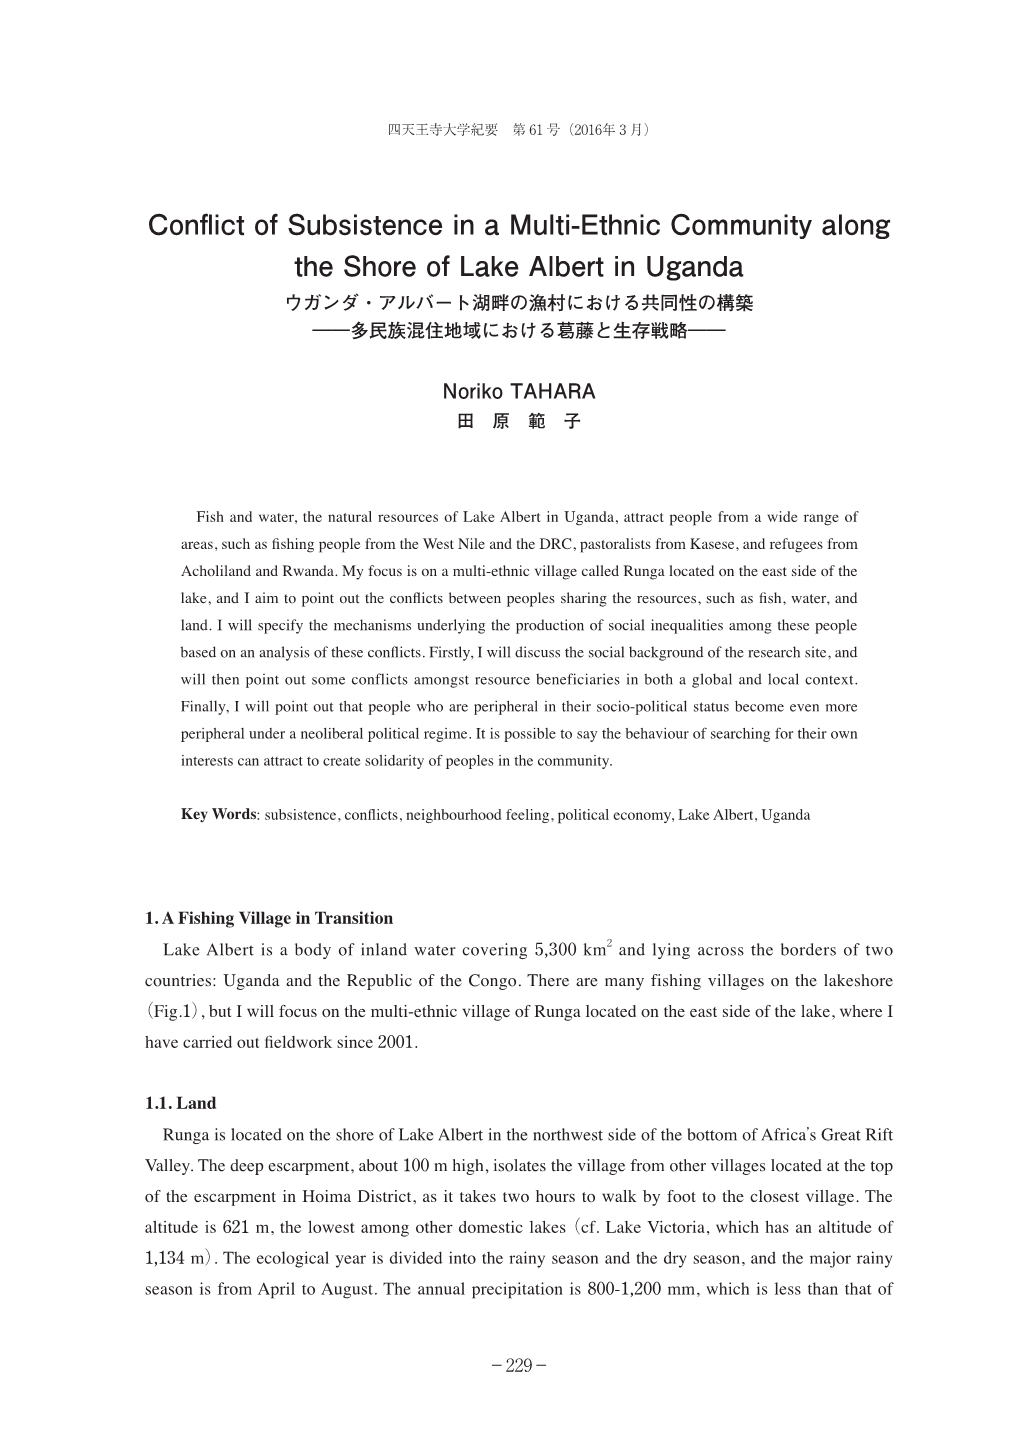 Conflict of Subsistence in a Multi-Ethnic Community Along the Shore of Lake Albert in Uganda ウガンダ・アルバート湖畔の漁村における共同性の構築 ――多民族混住地域における葛藤と生存戦略――